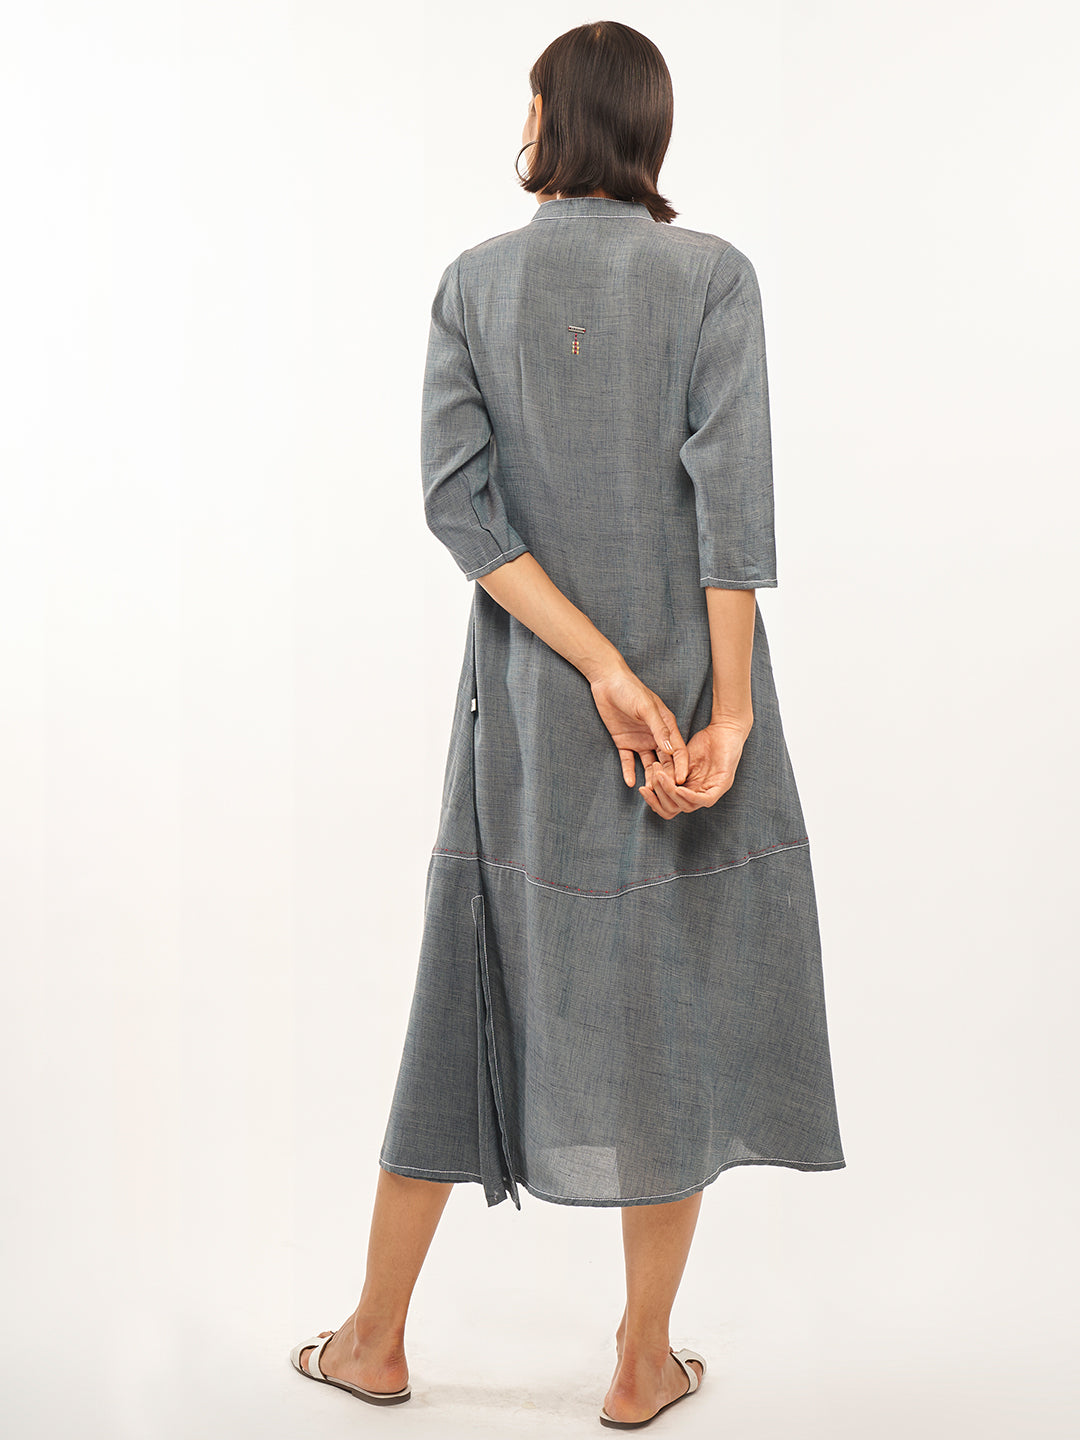 Grey A-Line Side Slit Dress - ARH895